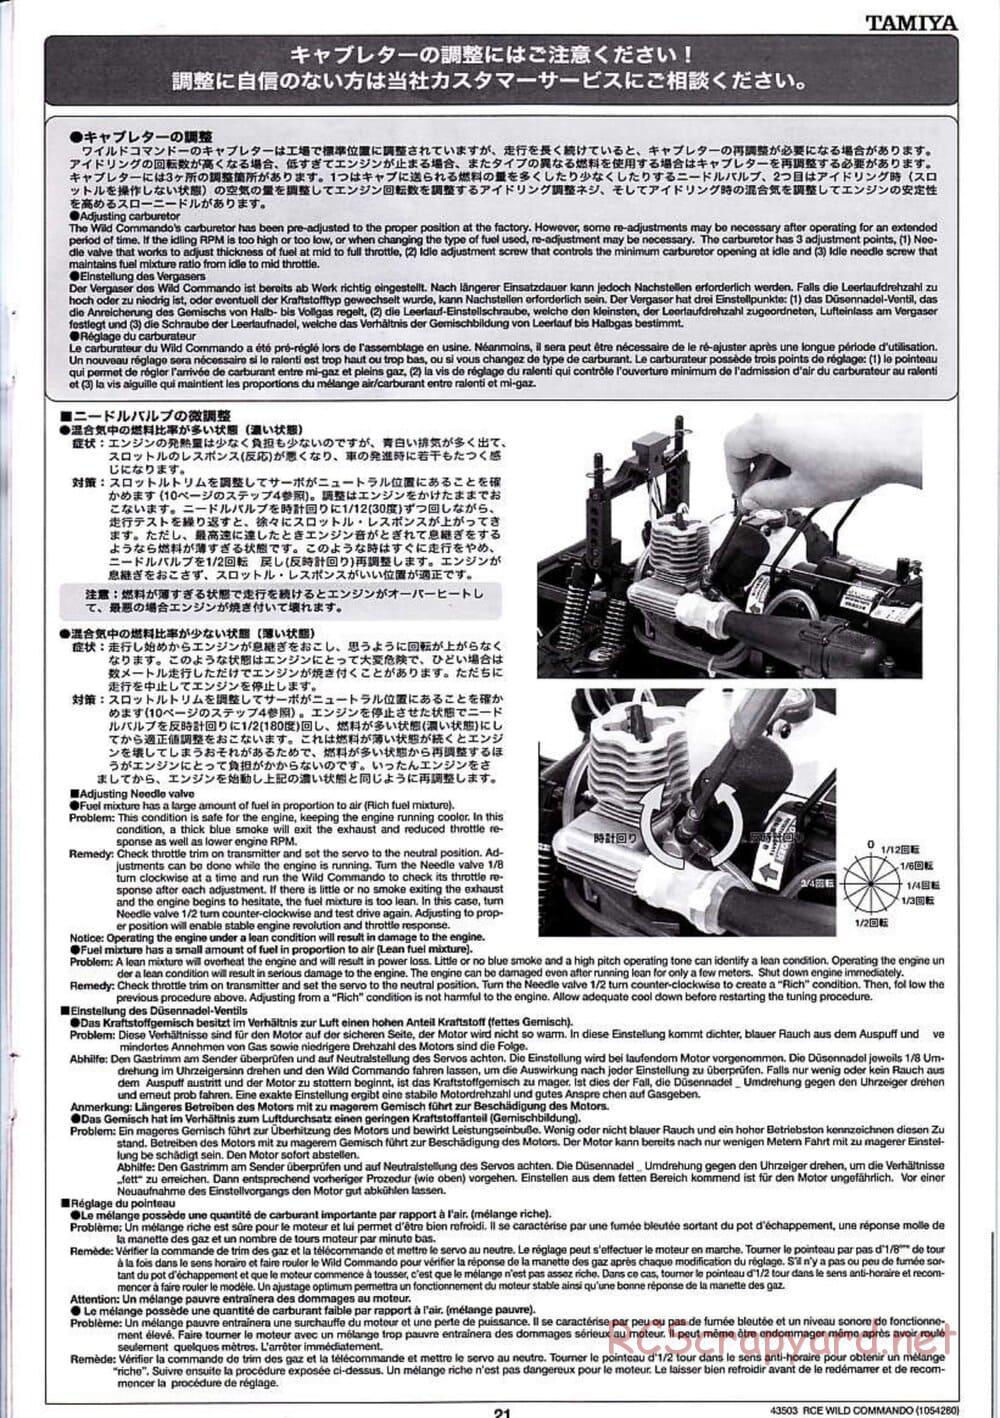 Tamiya - Wild Commando - TGM-02 Chassis - Manual - Page 21